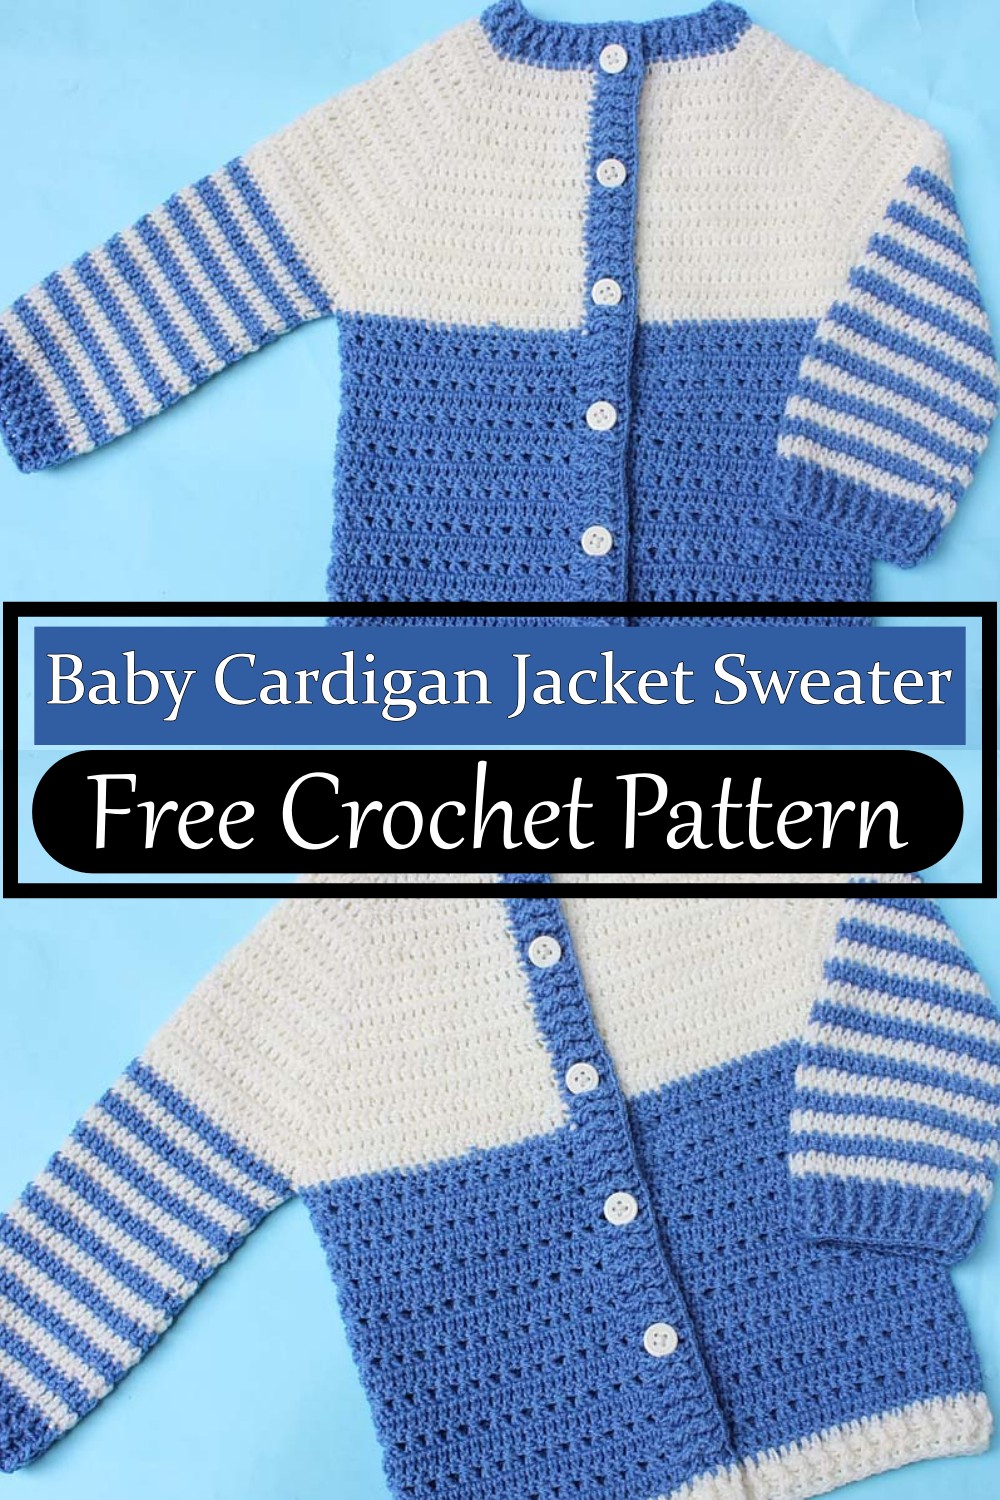 Baby Cardigan Jacket Sweater